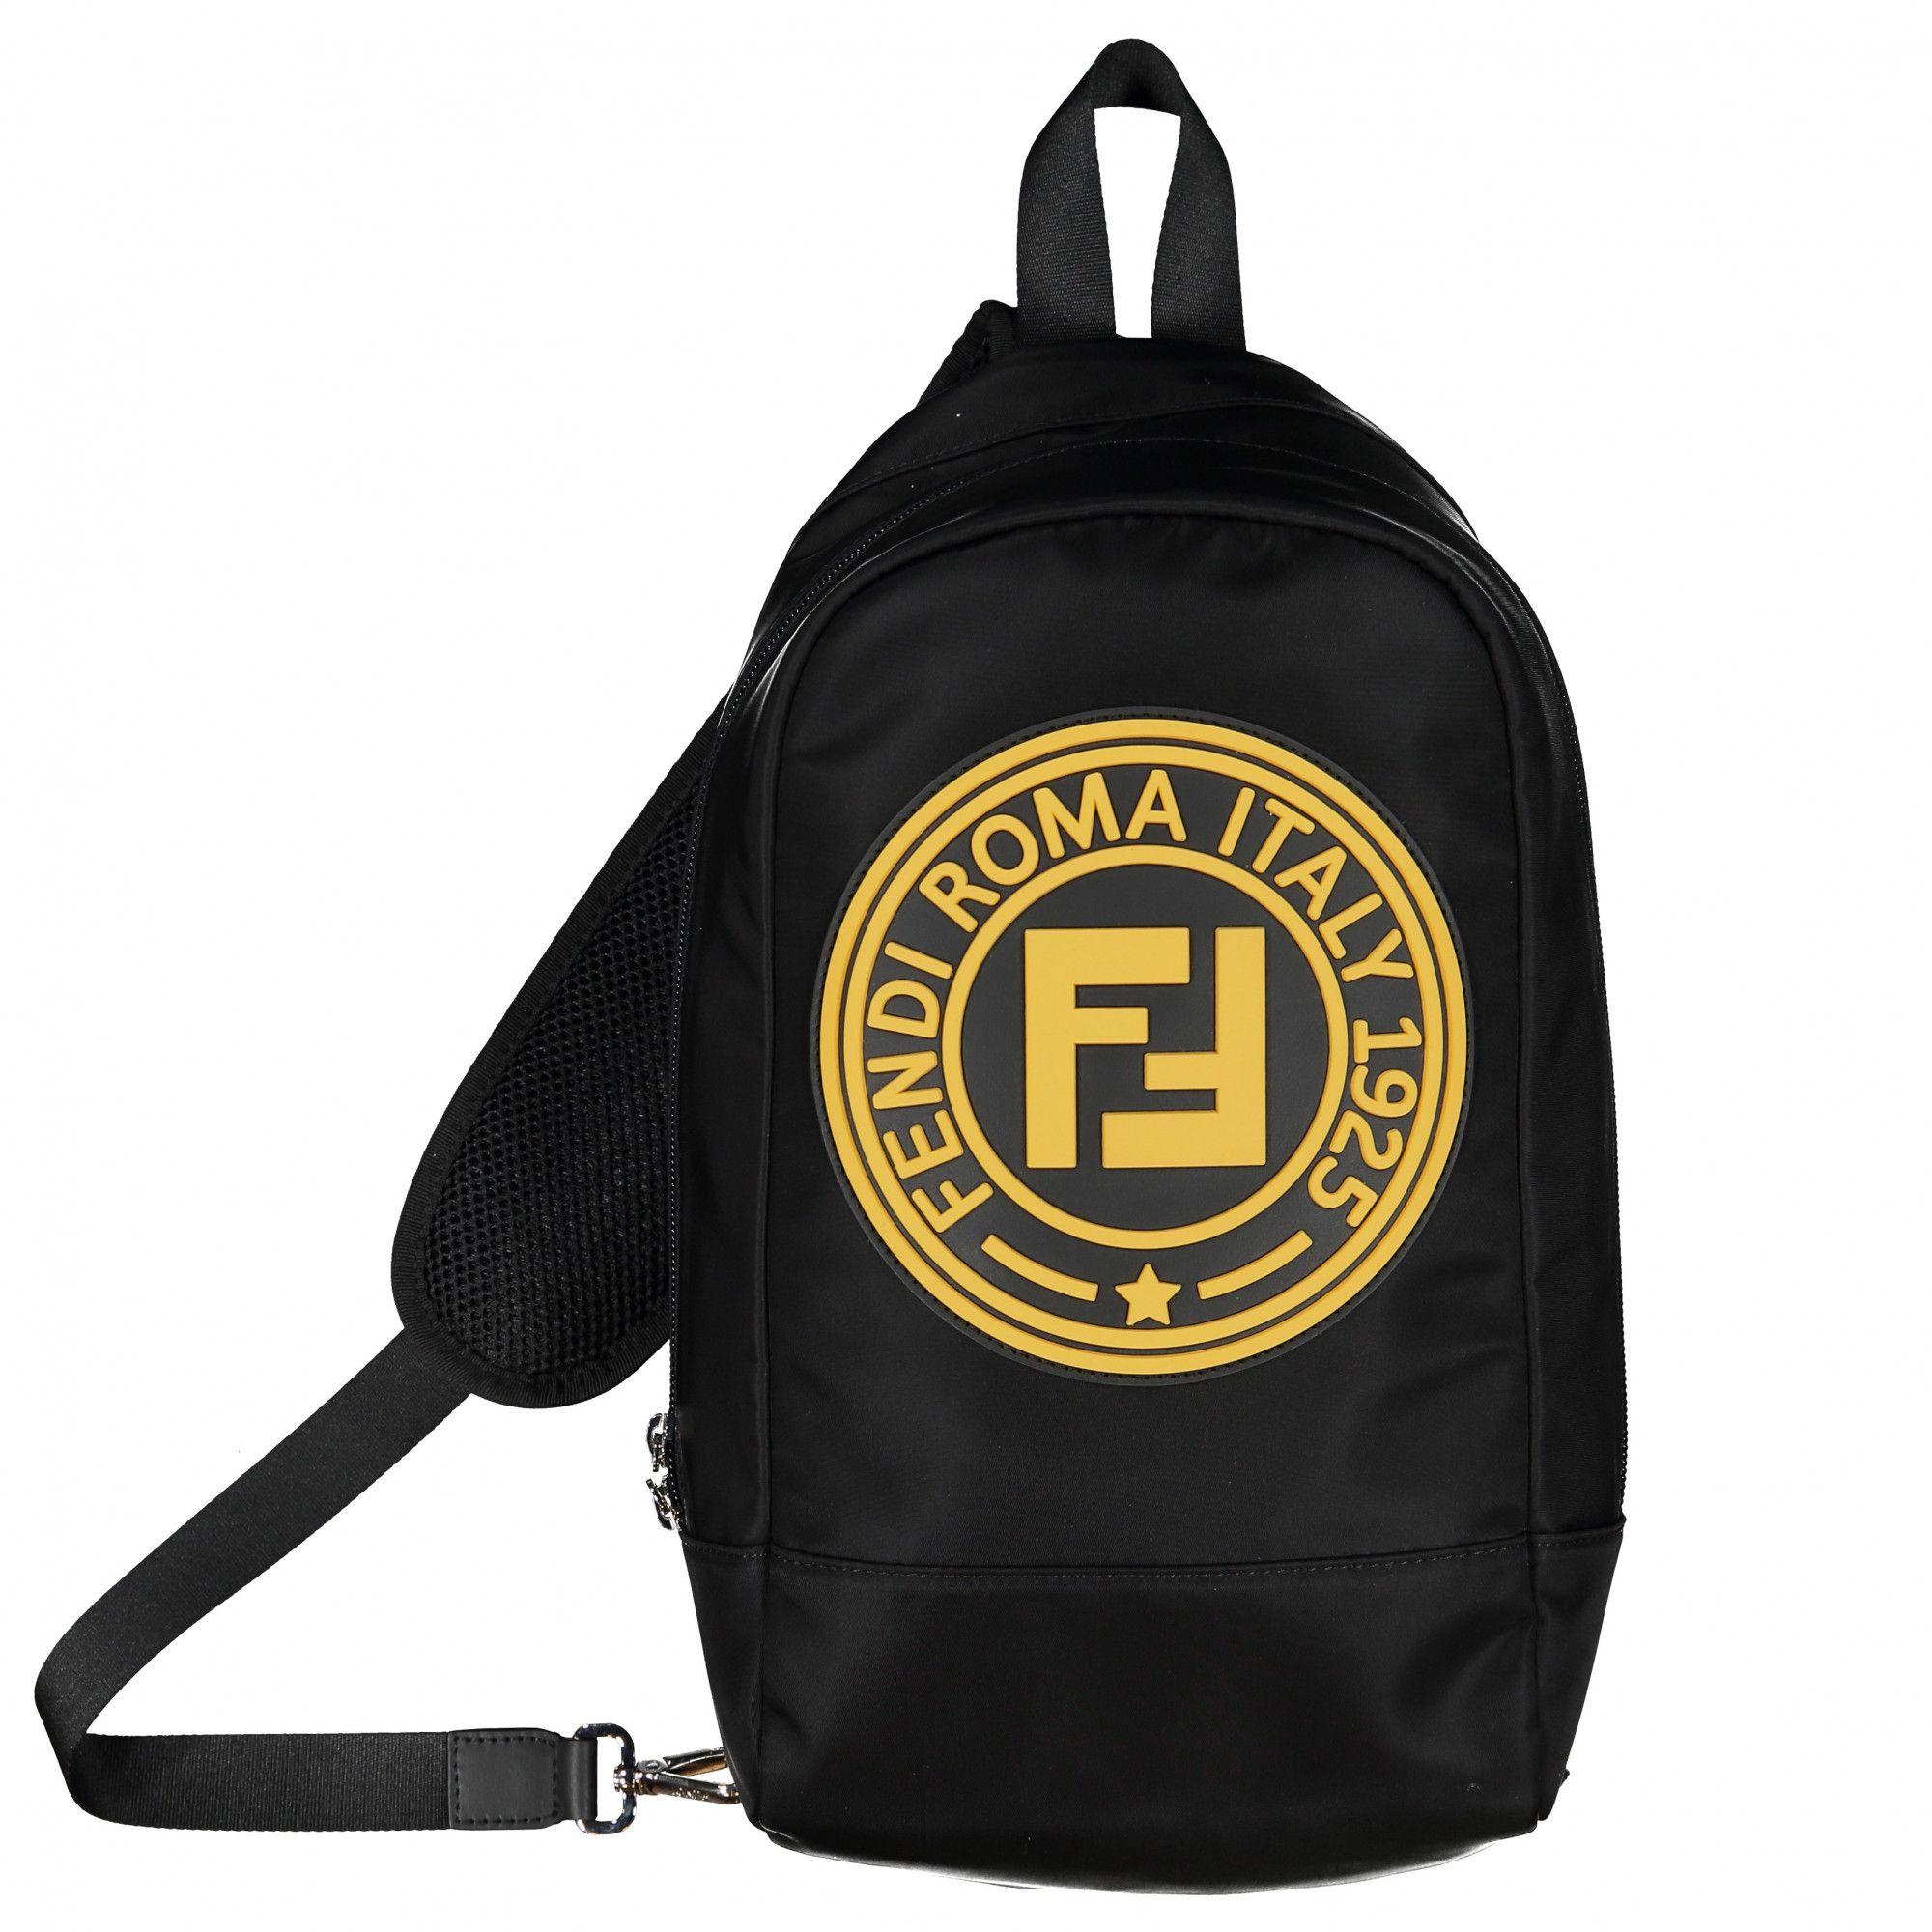 Double F Logo - Fendi Backpack with Yellow Double F Logo